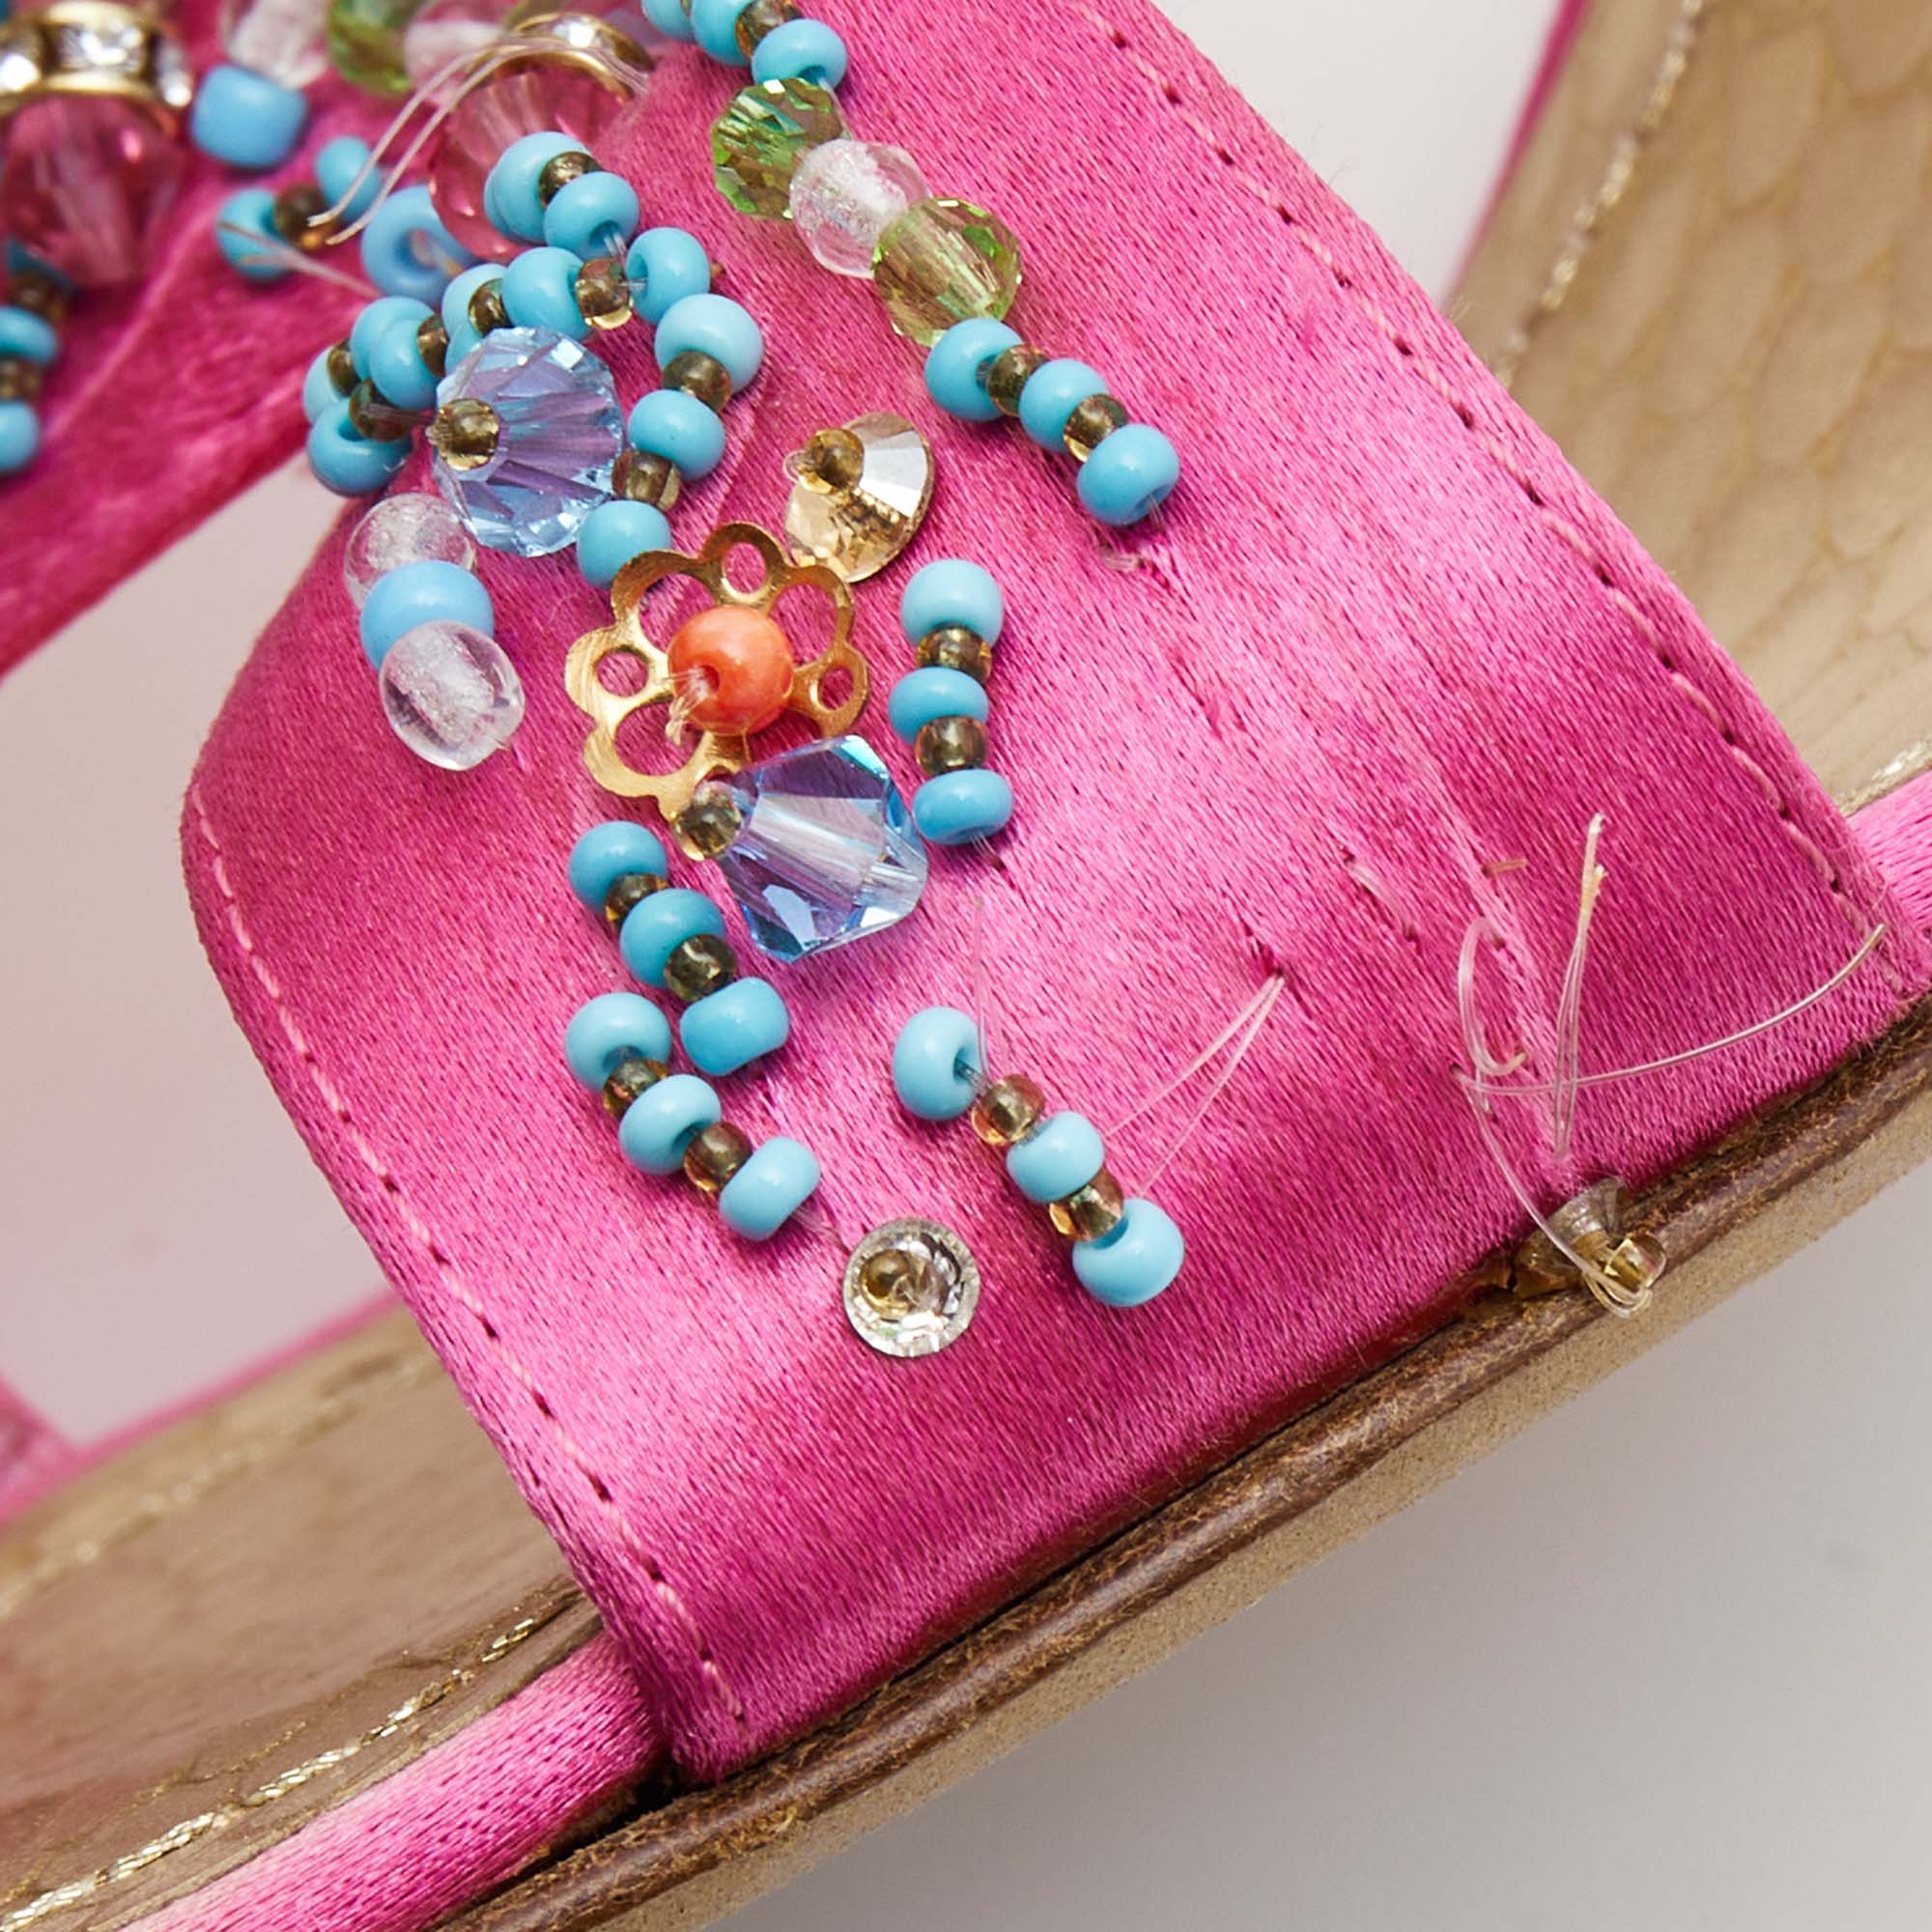 René Caovilla Pink Satin Embellished Criss Cross Ankle Strap Sandals Size 38.5